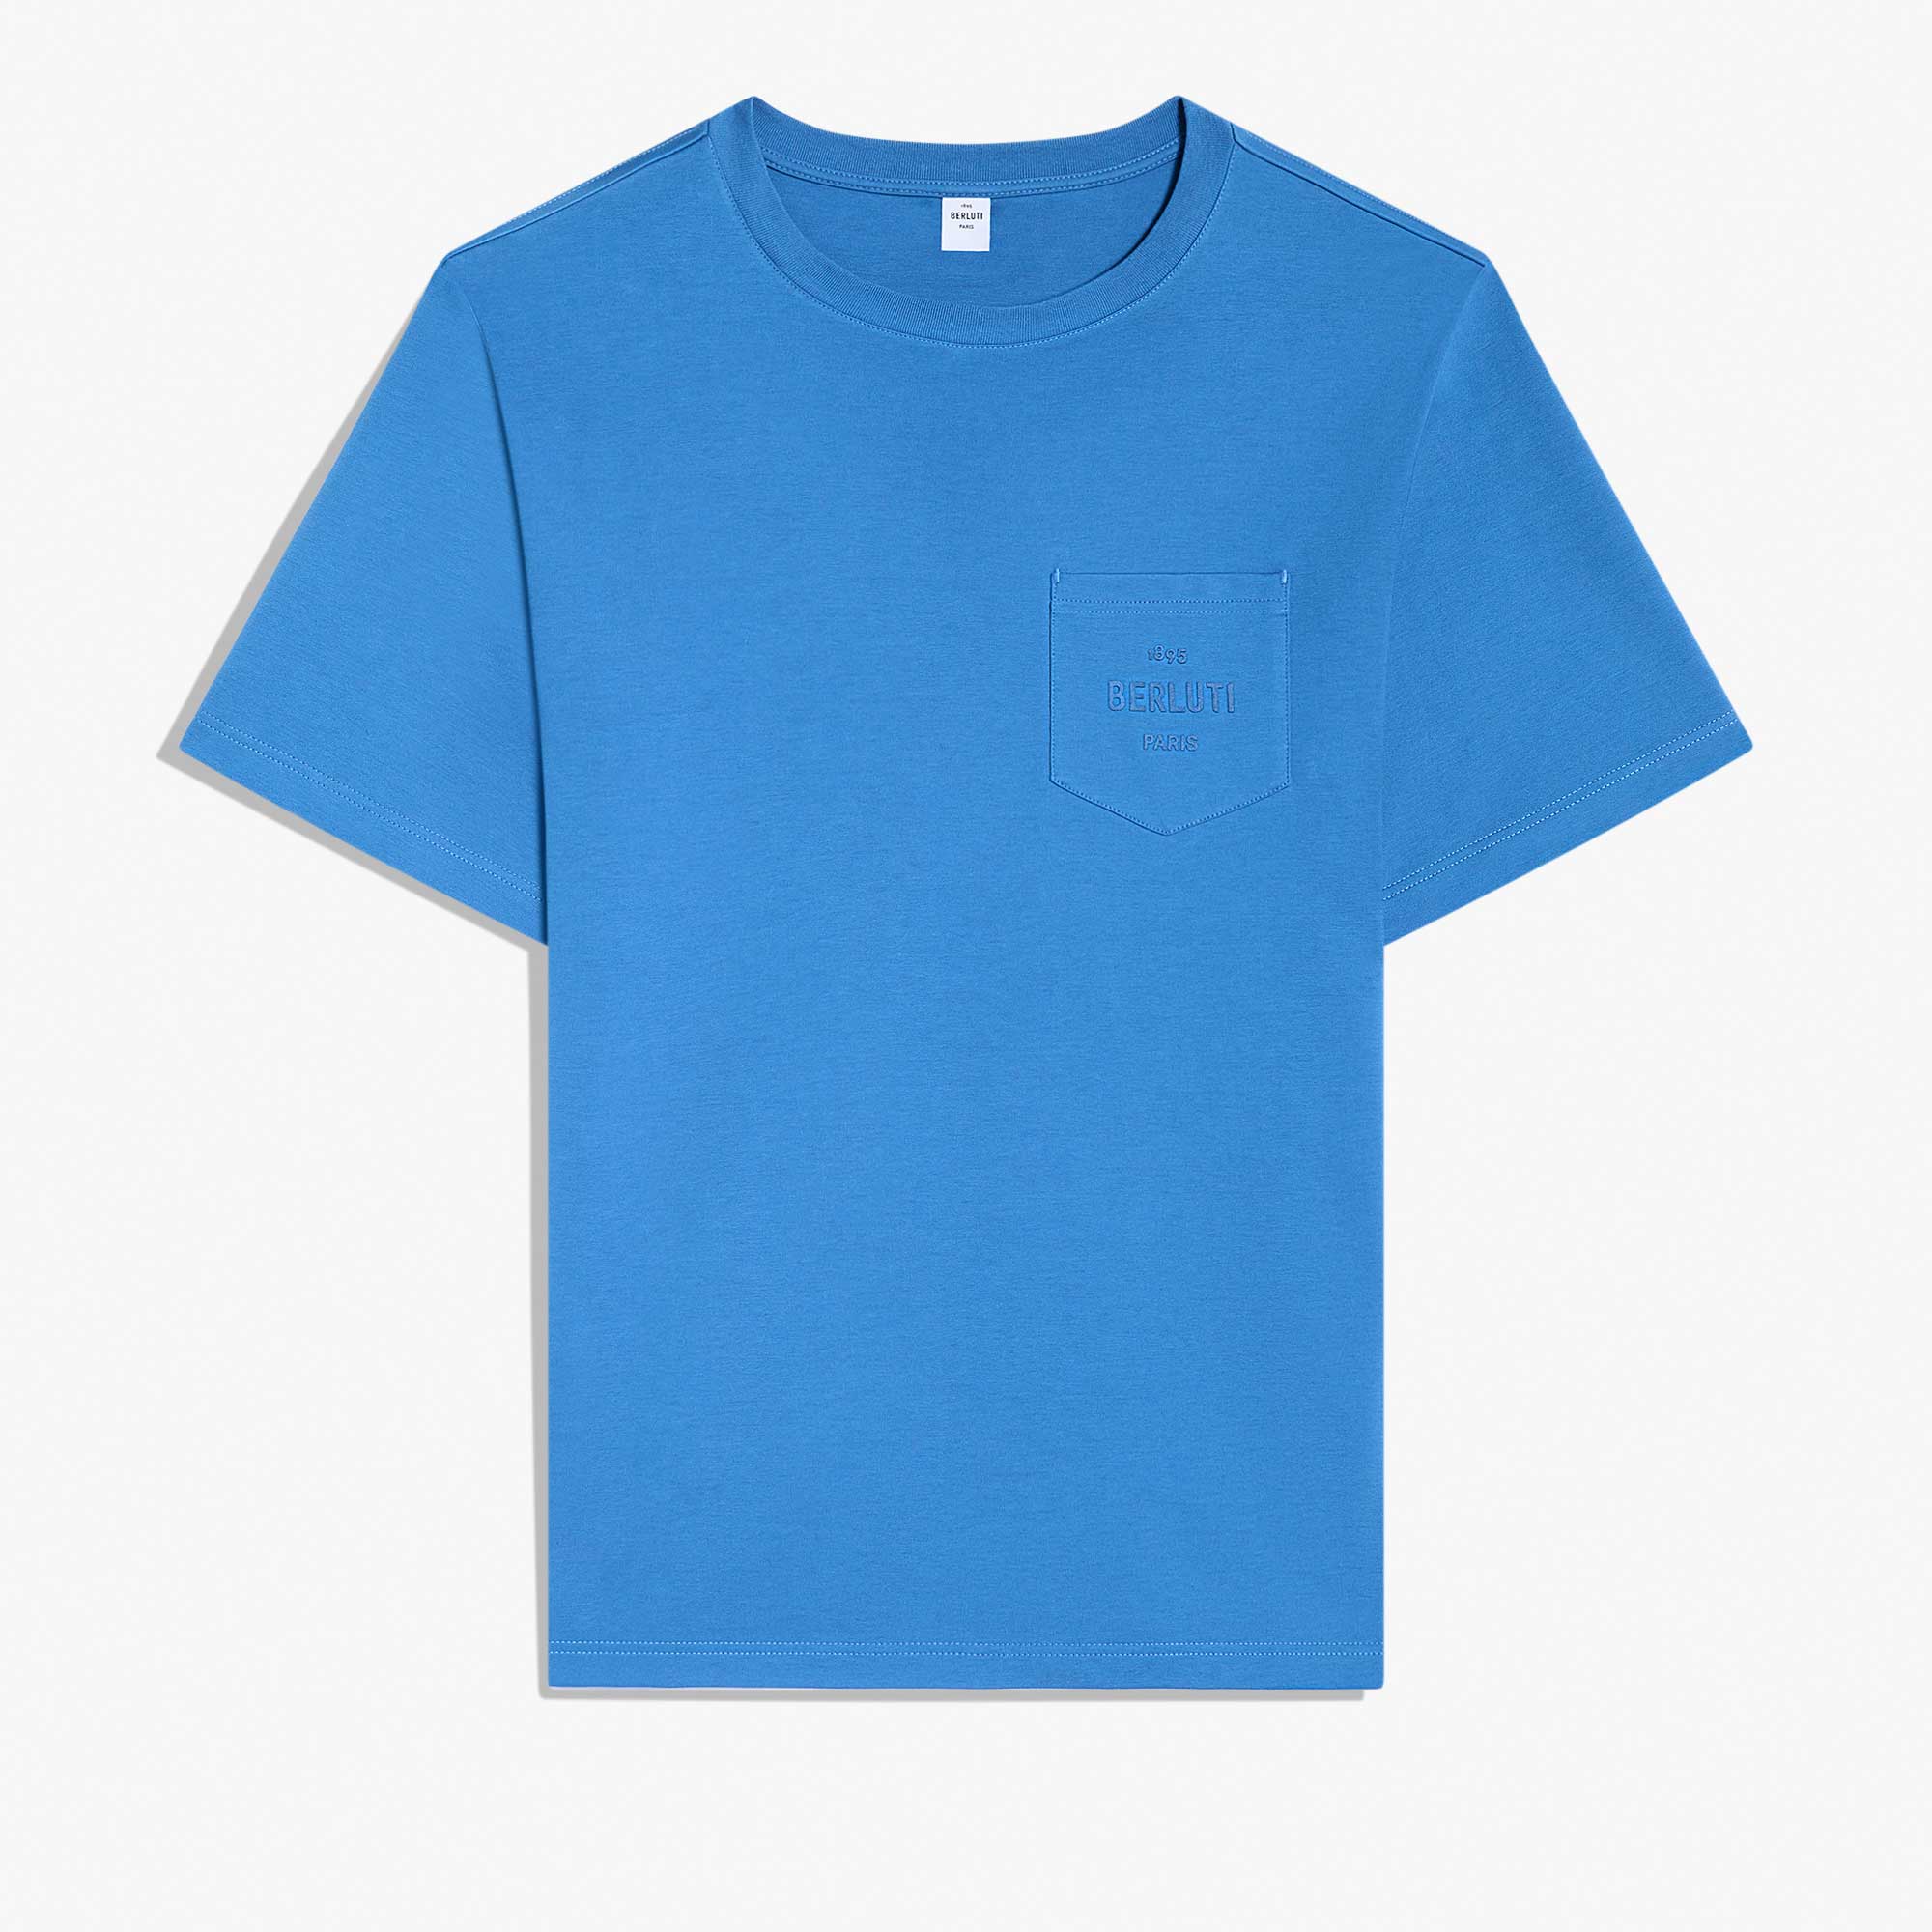 口袋LogoT恤衫, BLUE HAWAI, hi-res